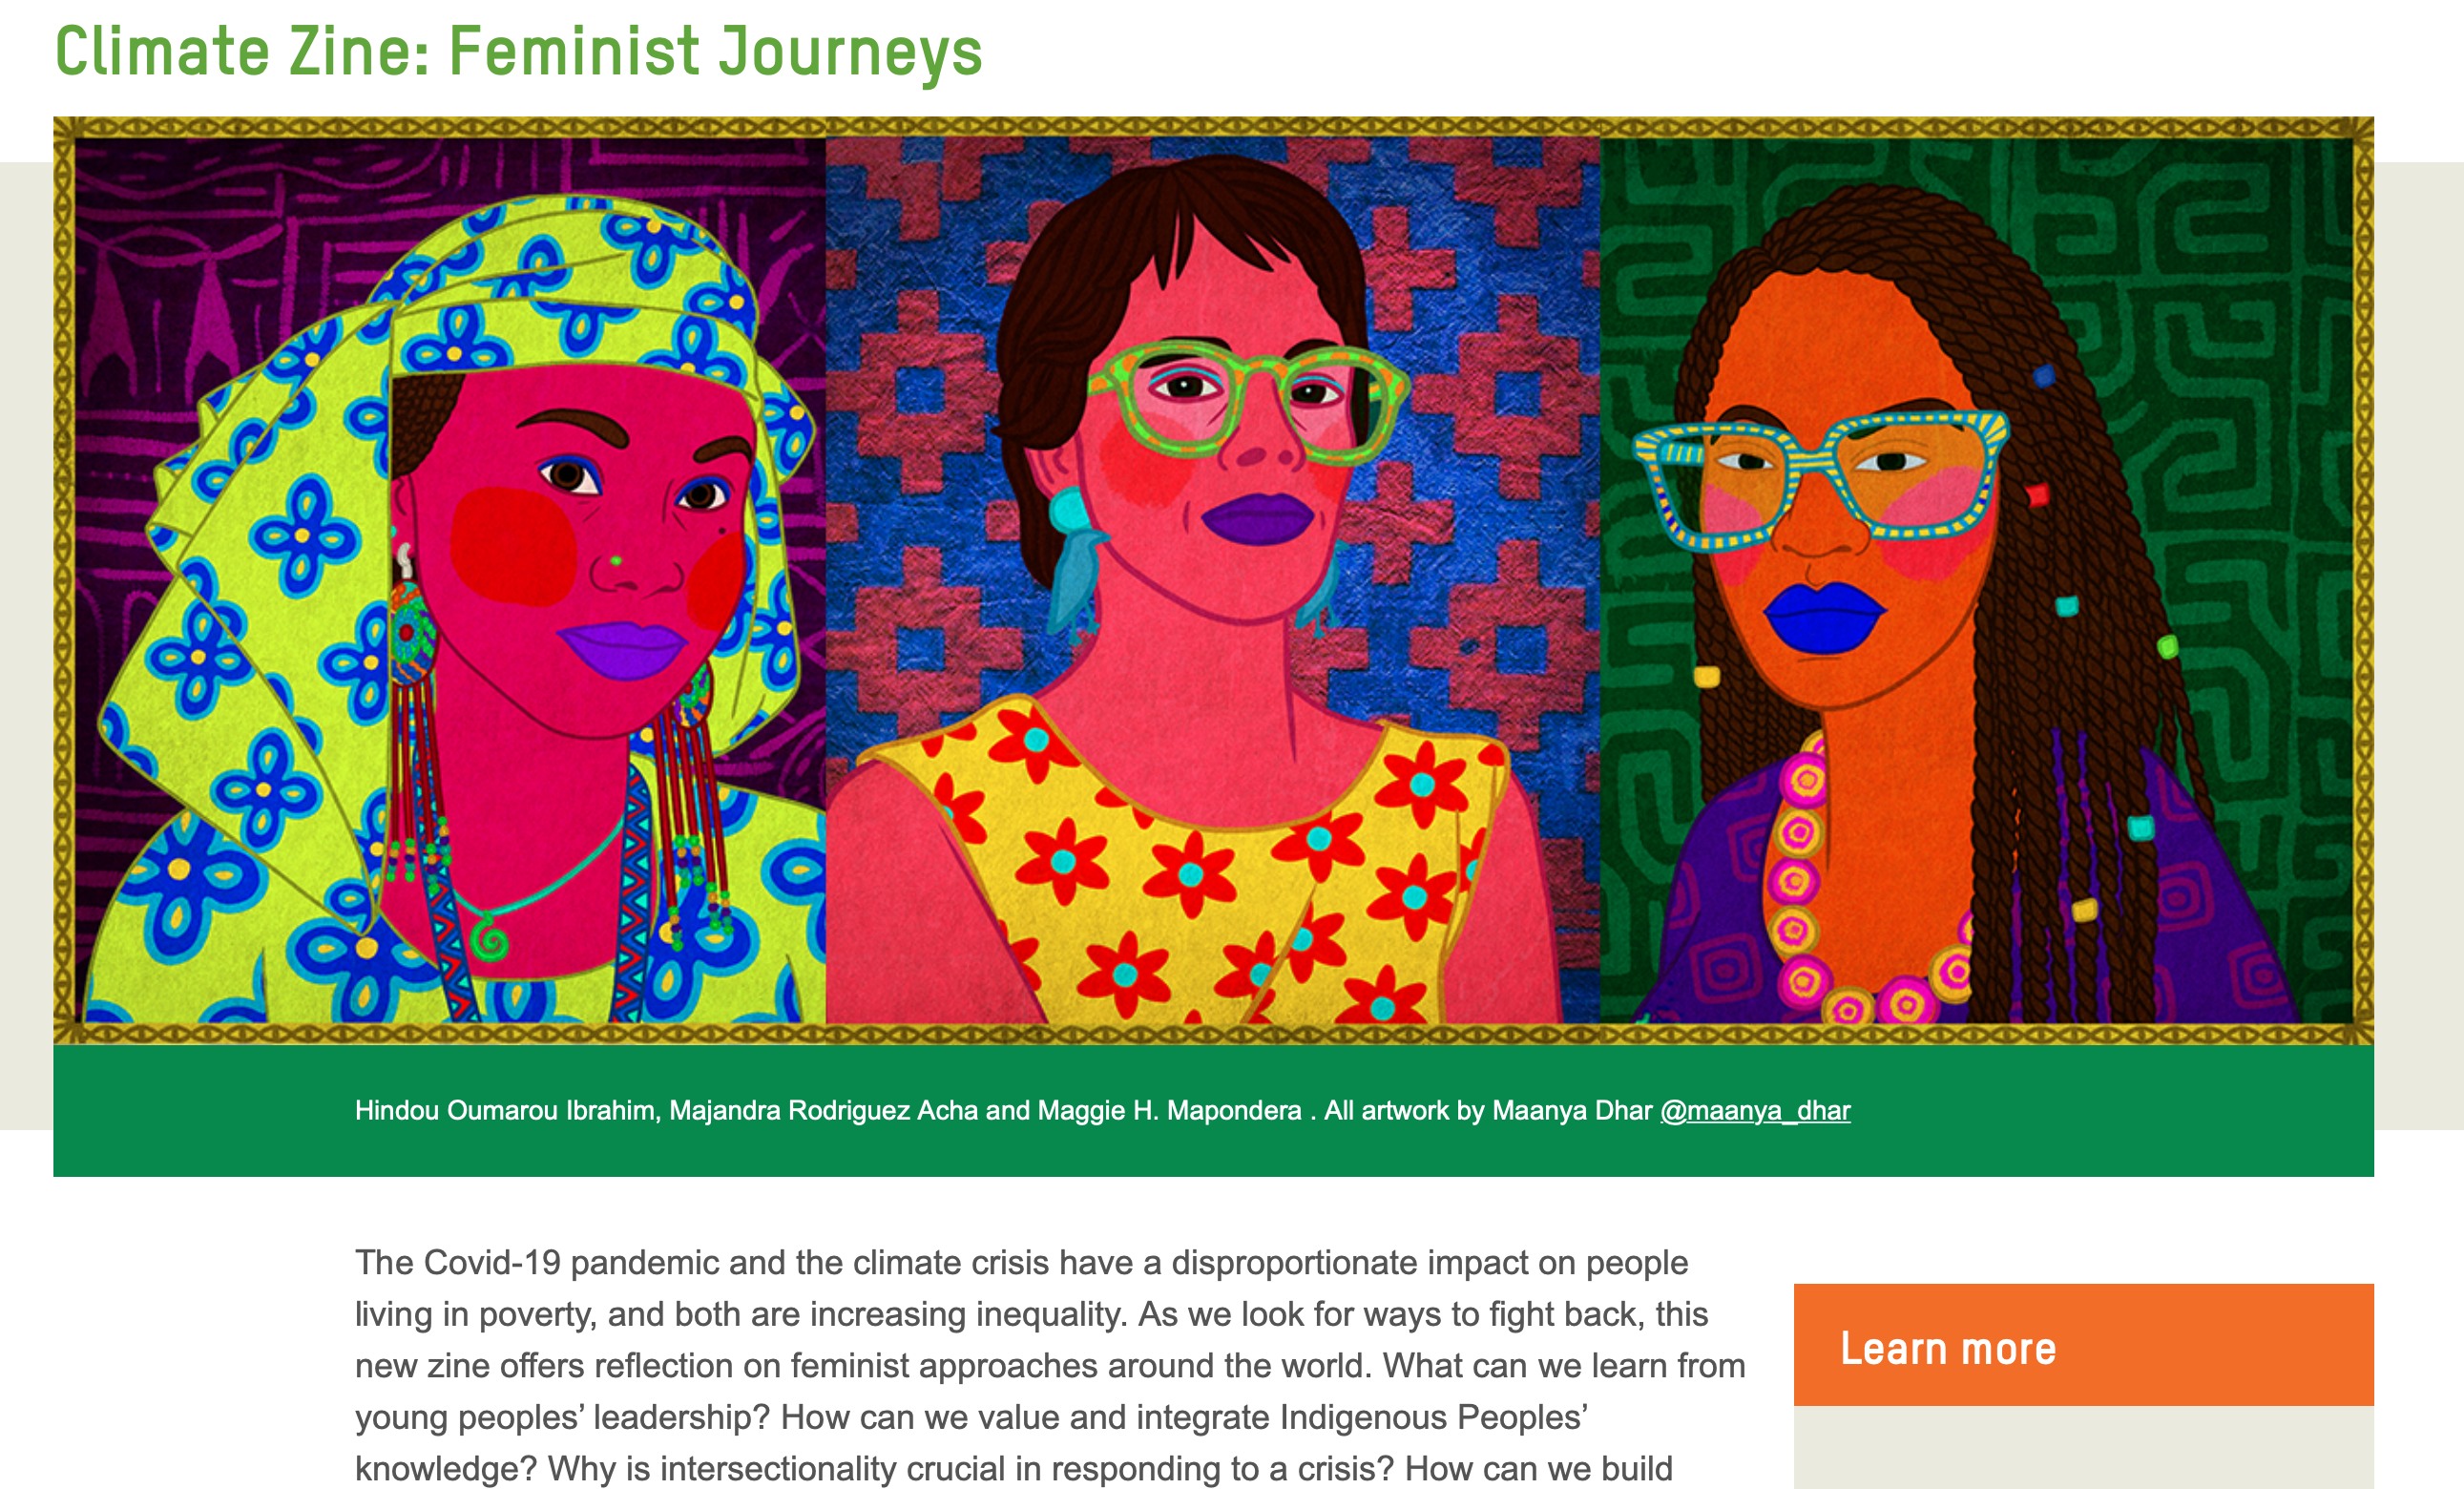 Climate zine: feminist journeys